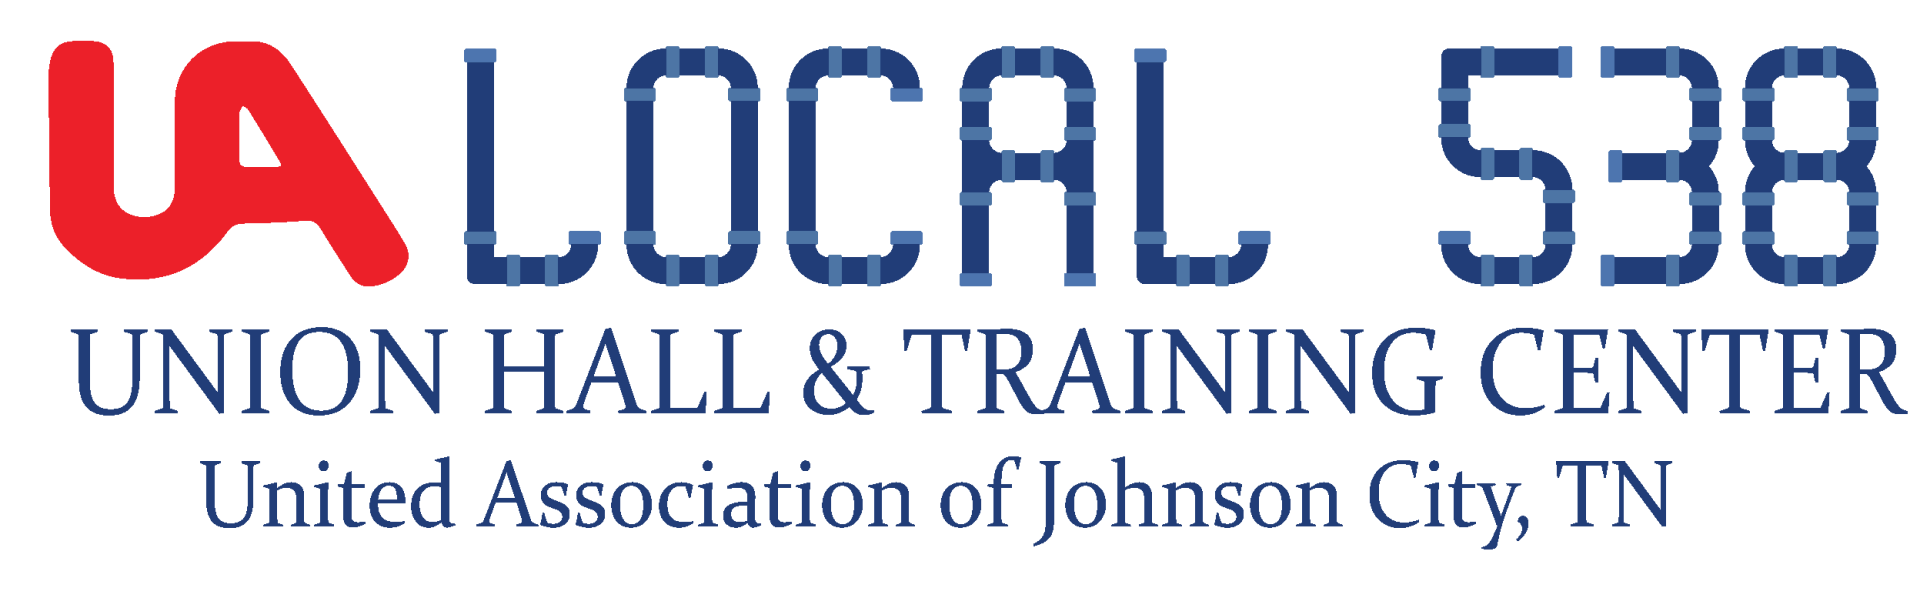 United Association Local 538 Union Hall & Training Center Horizontal Logo